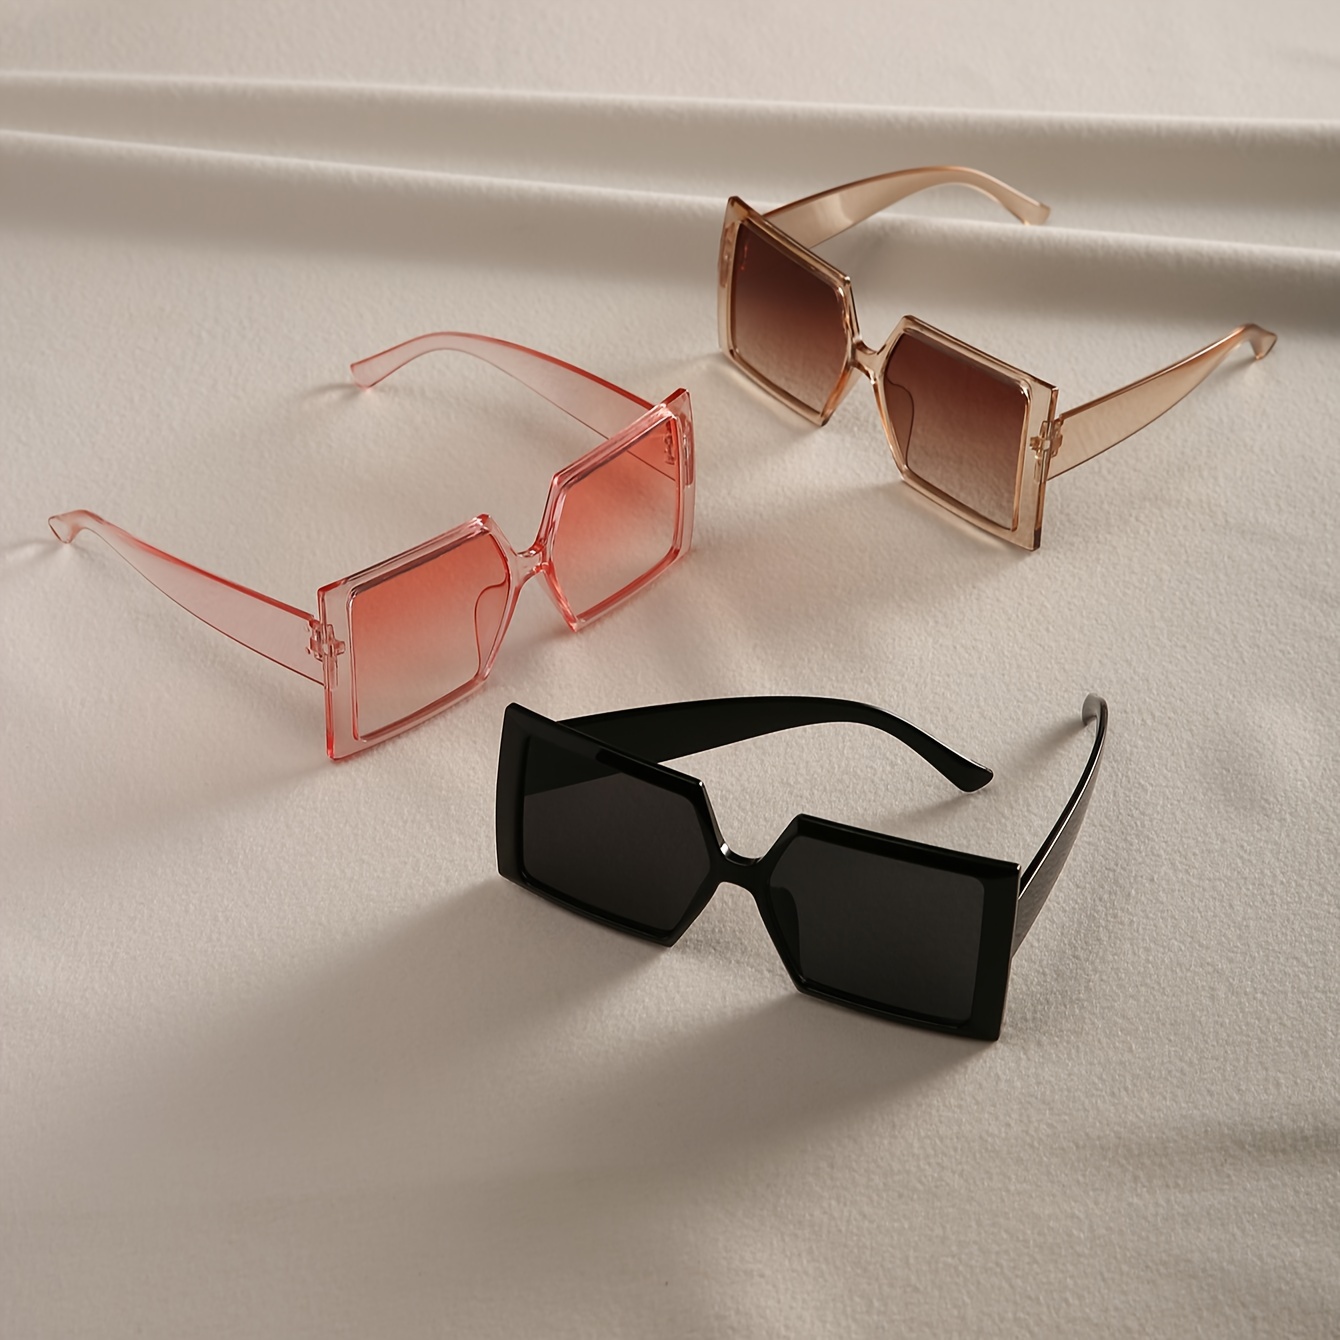 

3pcs Large Square Fashion For Women Men Anti Glare Sun Shades Glasses For Driving Beach Travel